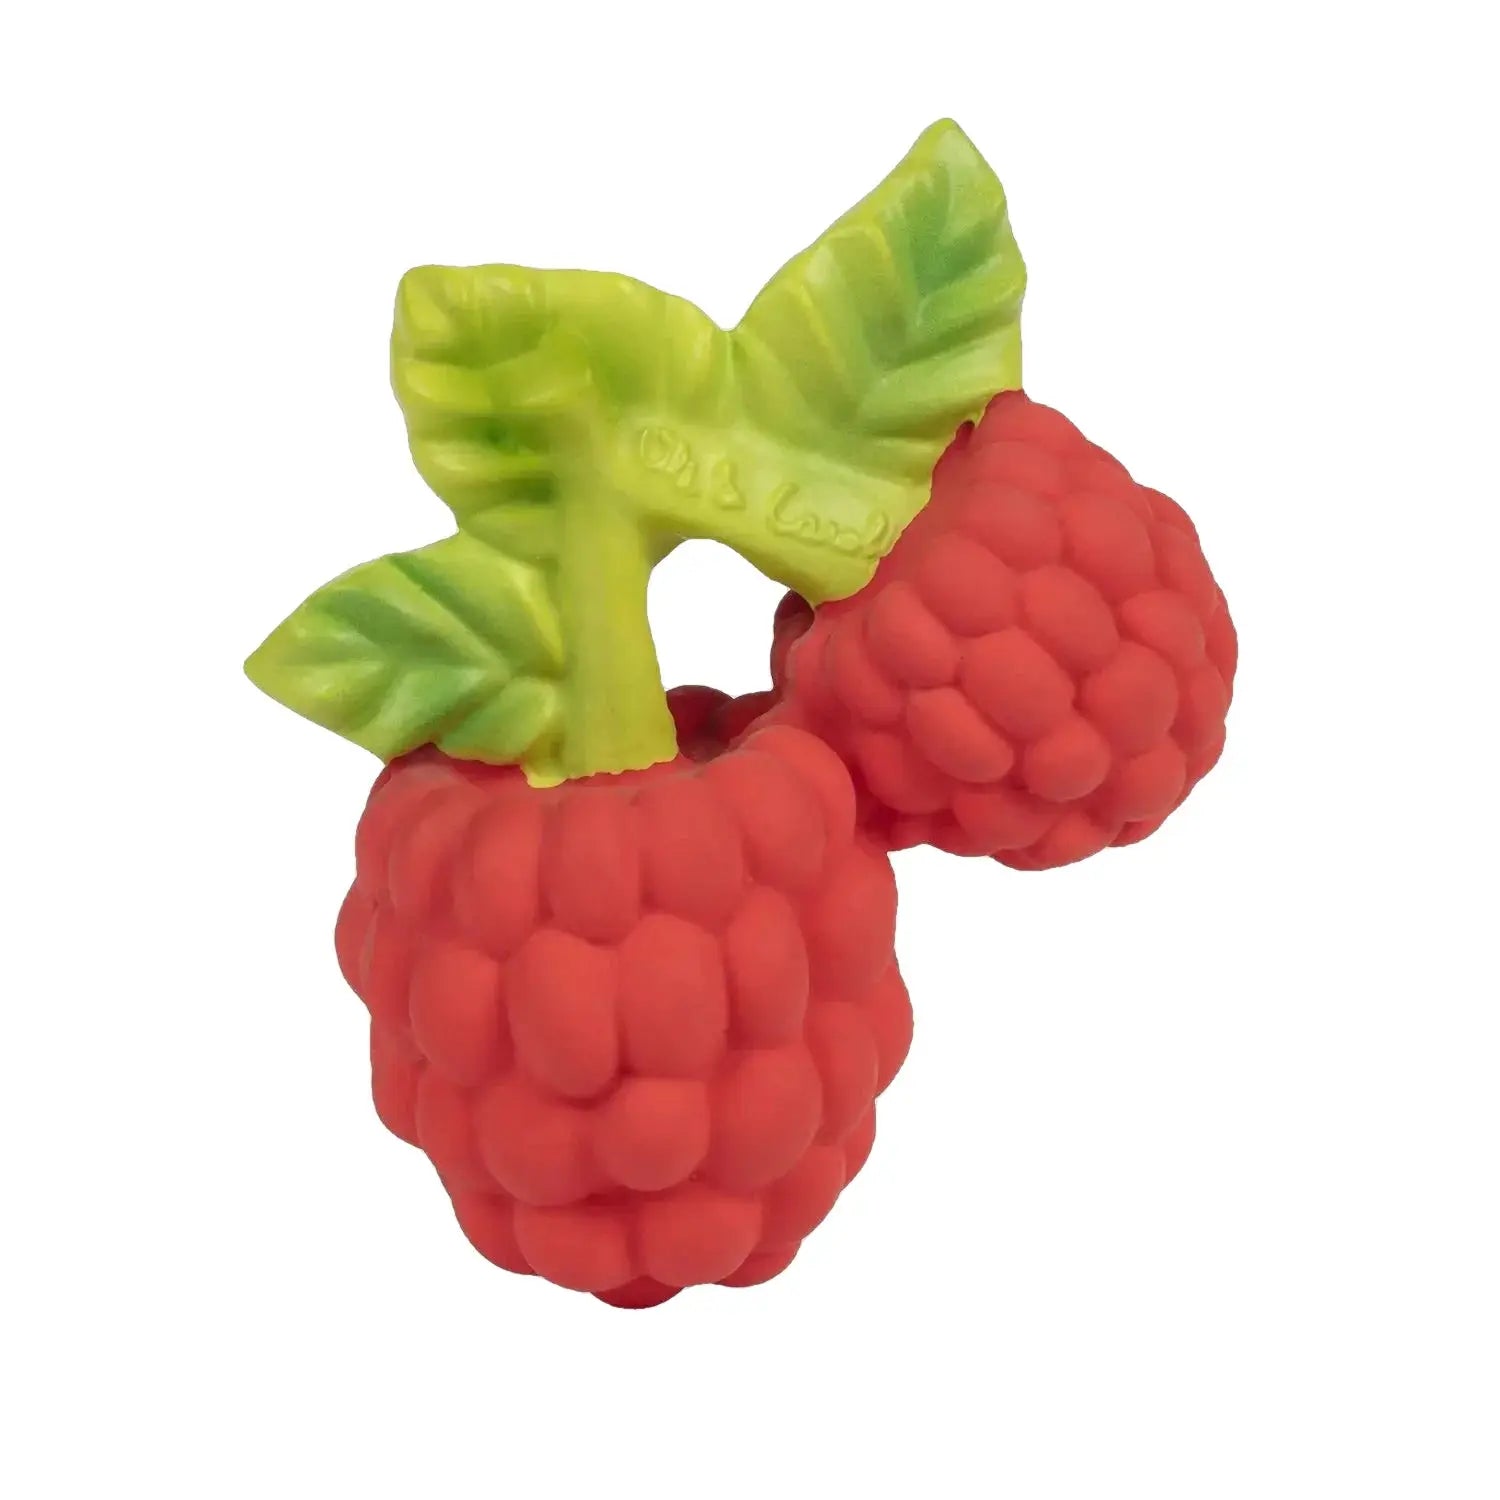 Oli & Carol Fruit & Veggie Baby Teether Toy - Valery the Raspberry. Red berries and green leaf teether.